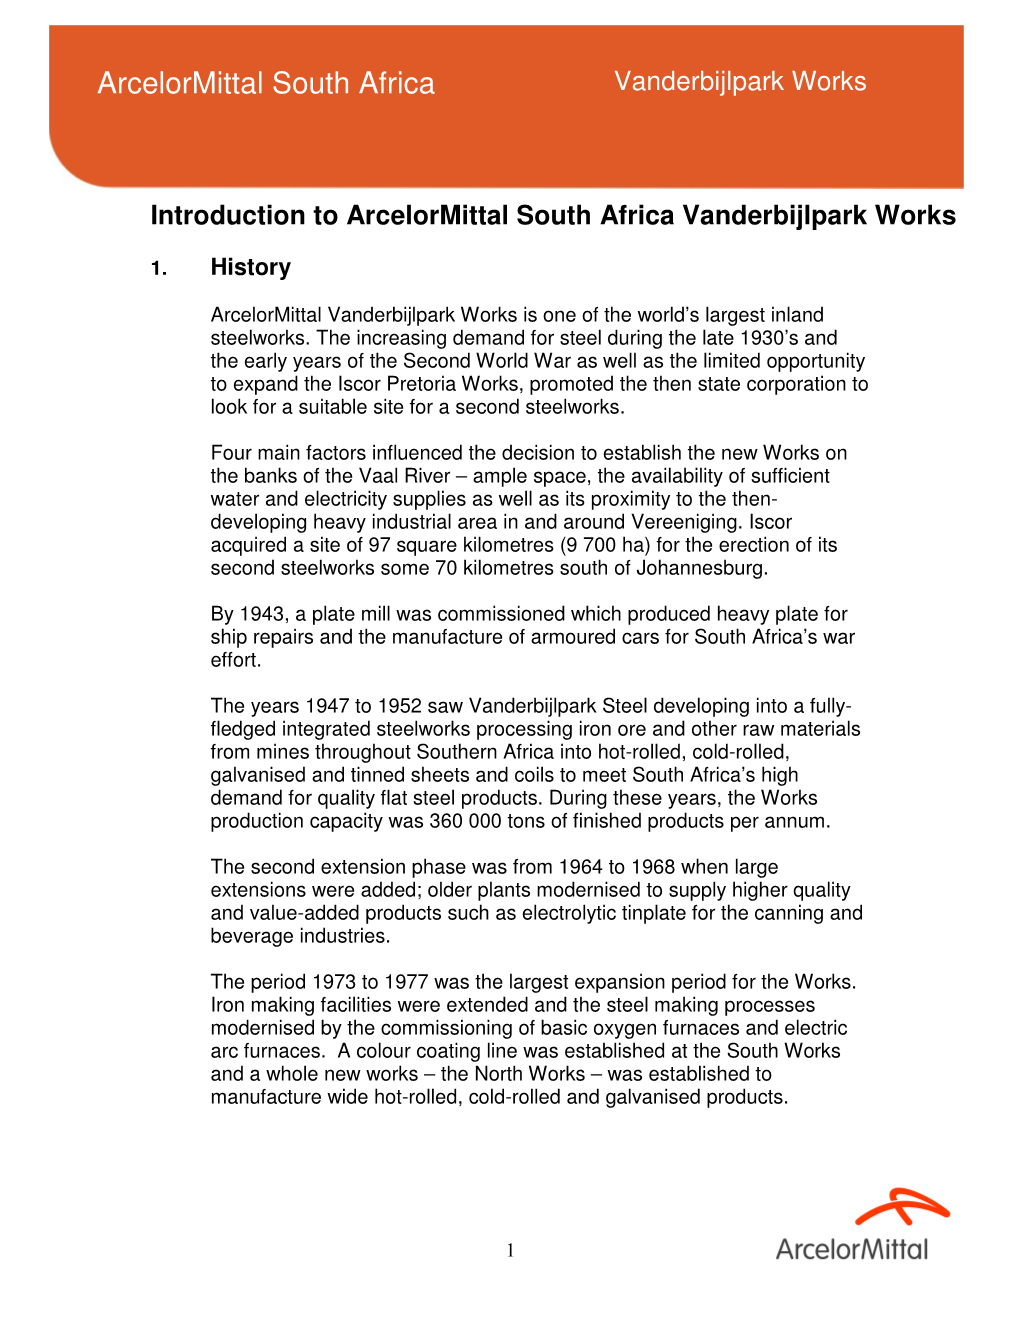 Introduction to Arcelormittal South Africa Vanderbijlpark Works